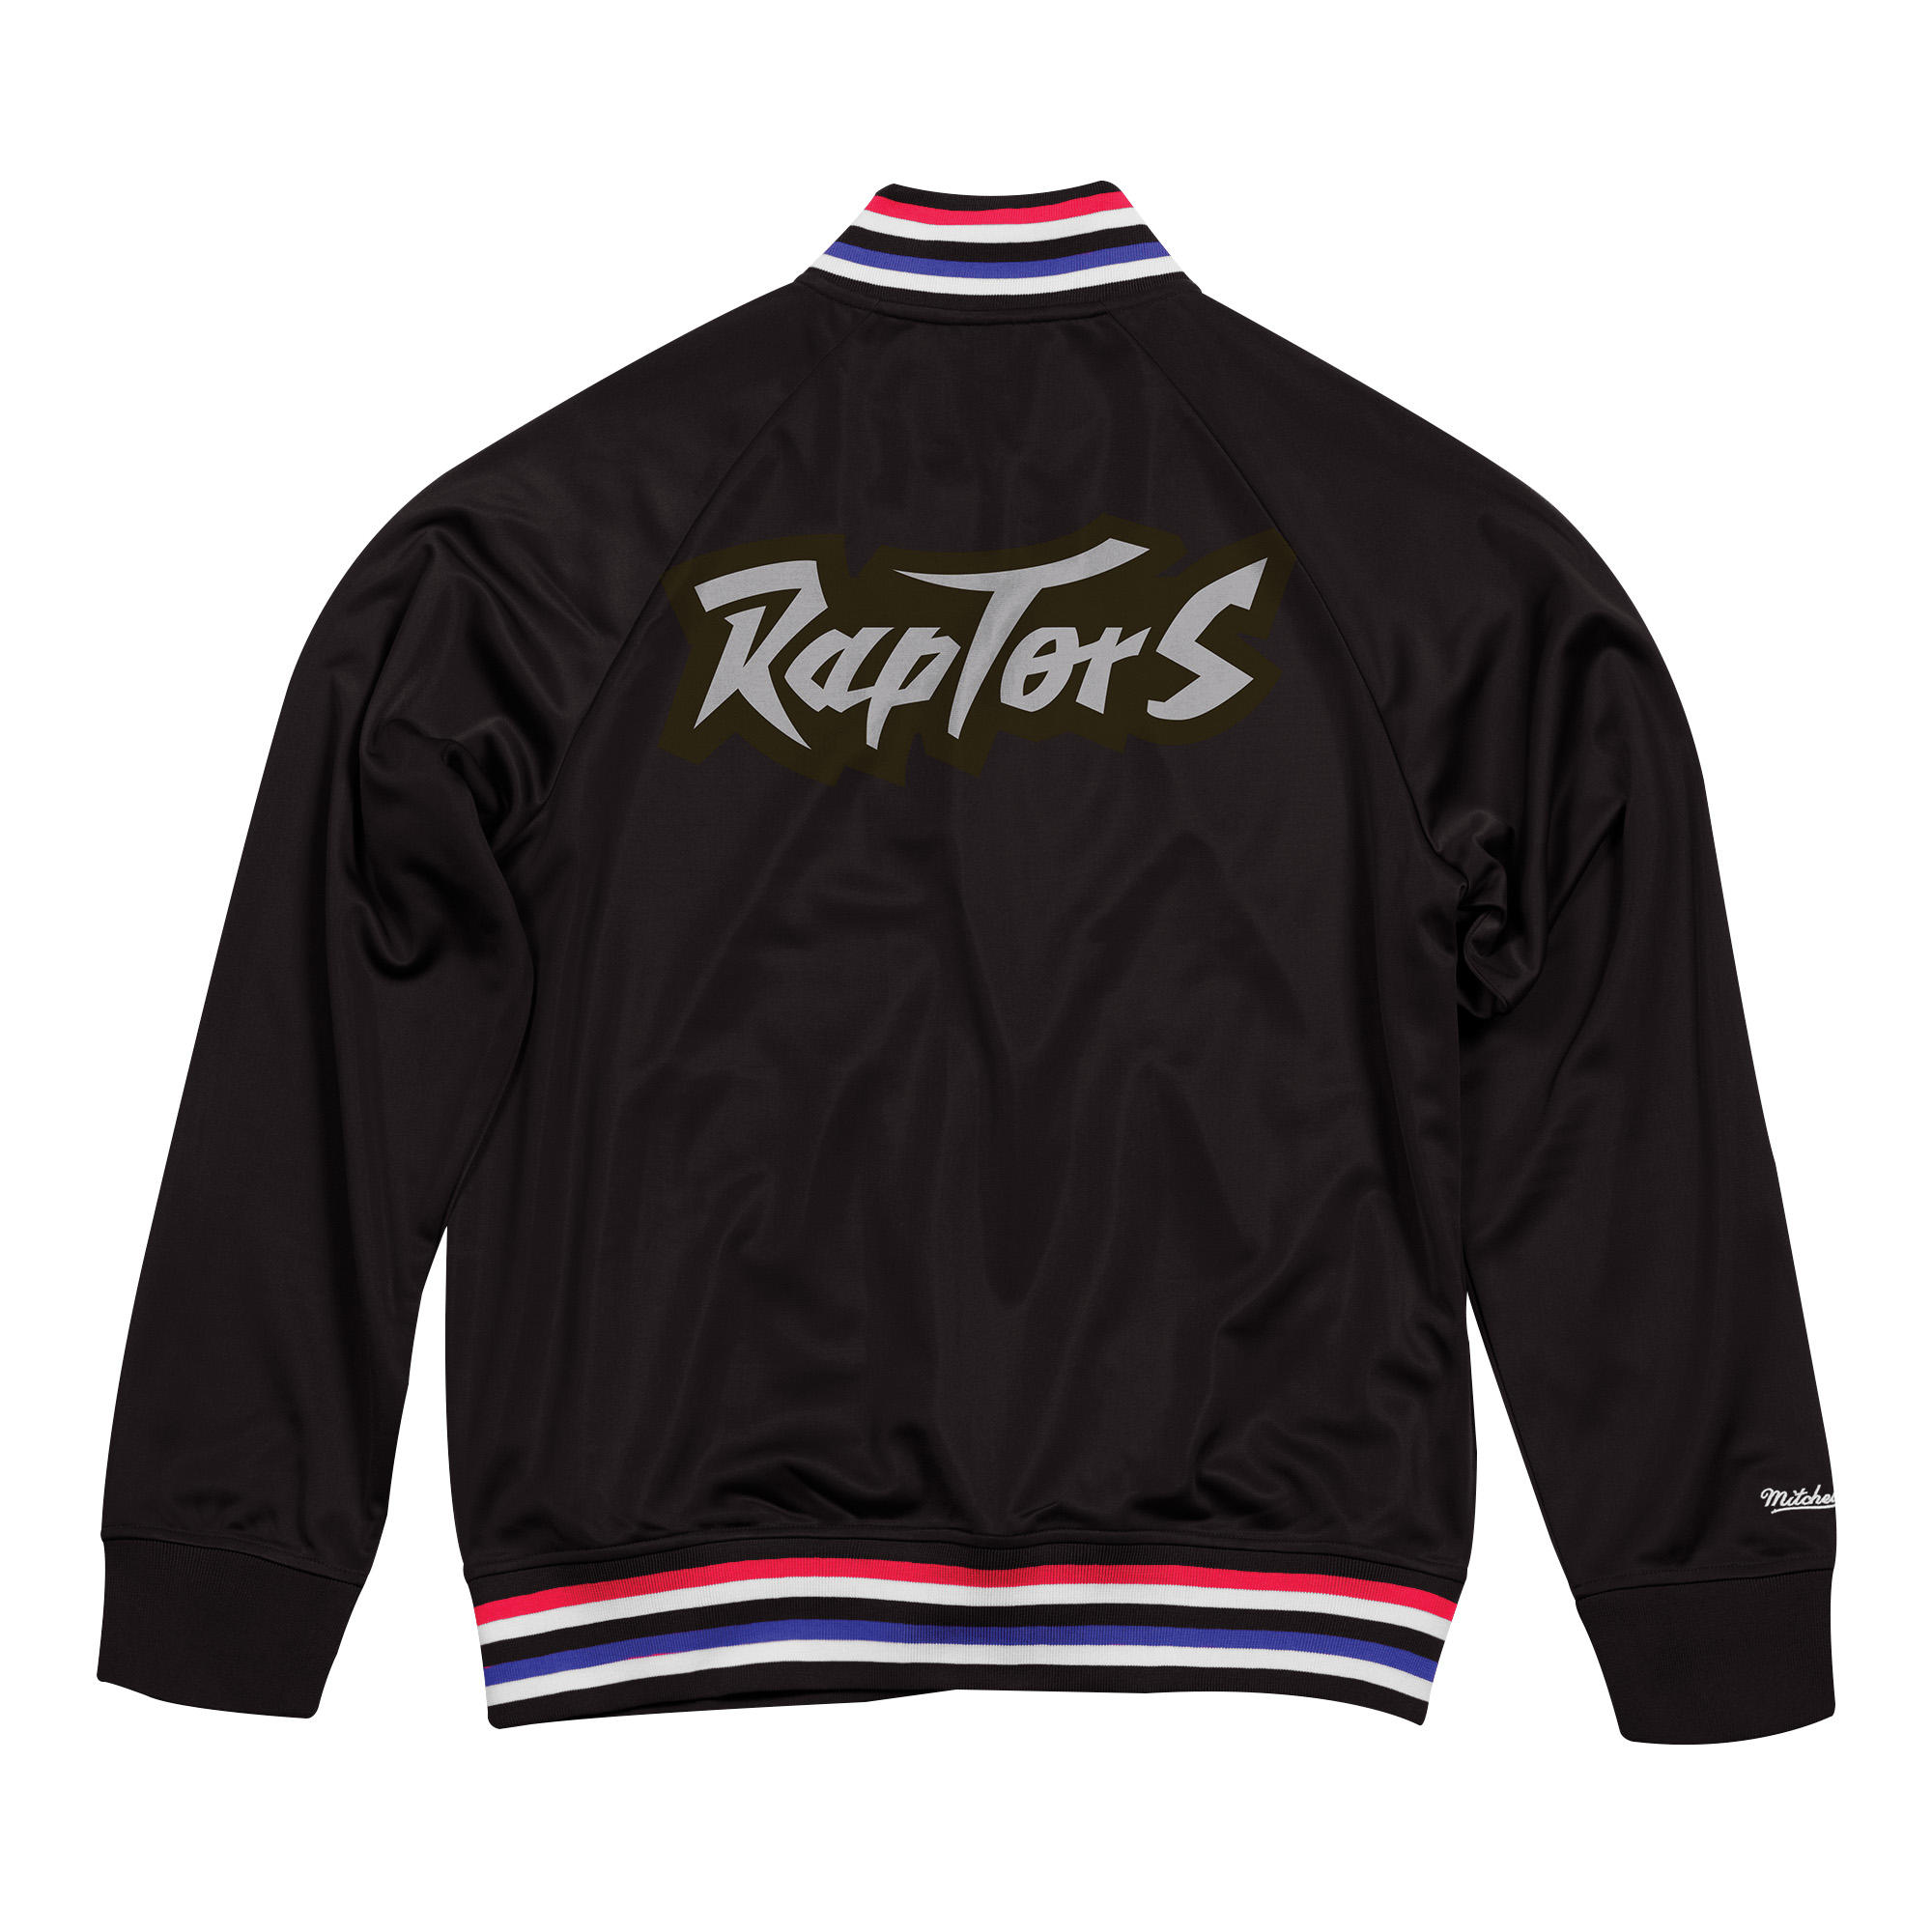 Mitchell & Ness Nostalgia Co. | Top Prospect Jacket - Toronto Raptors